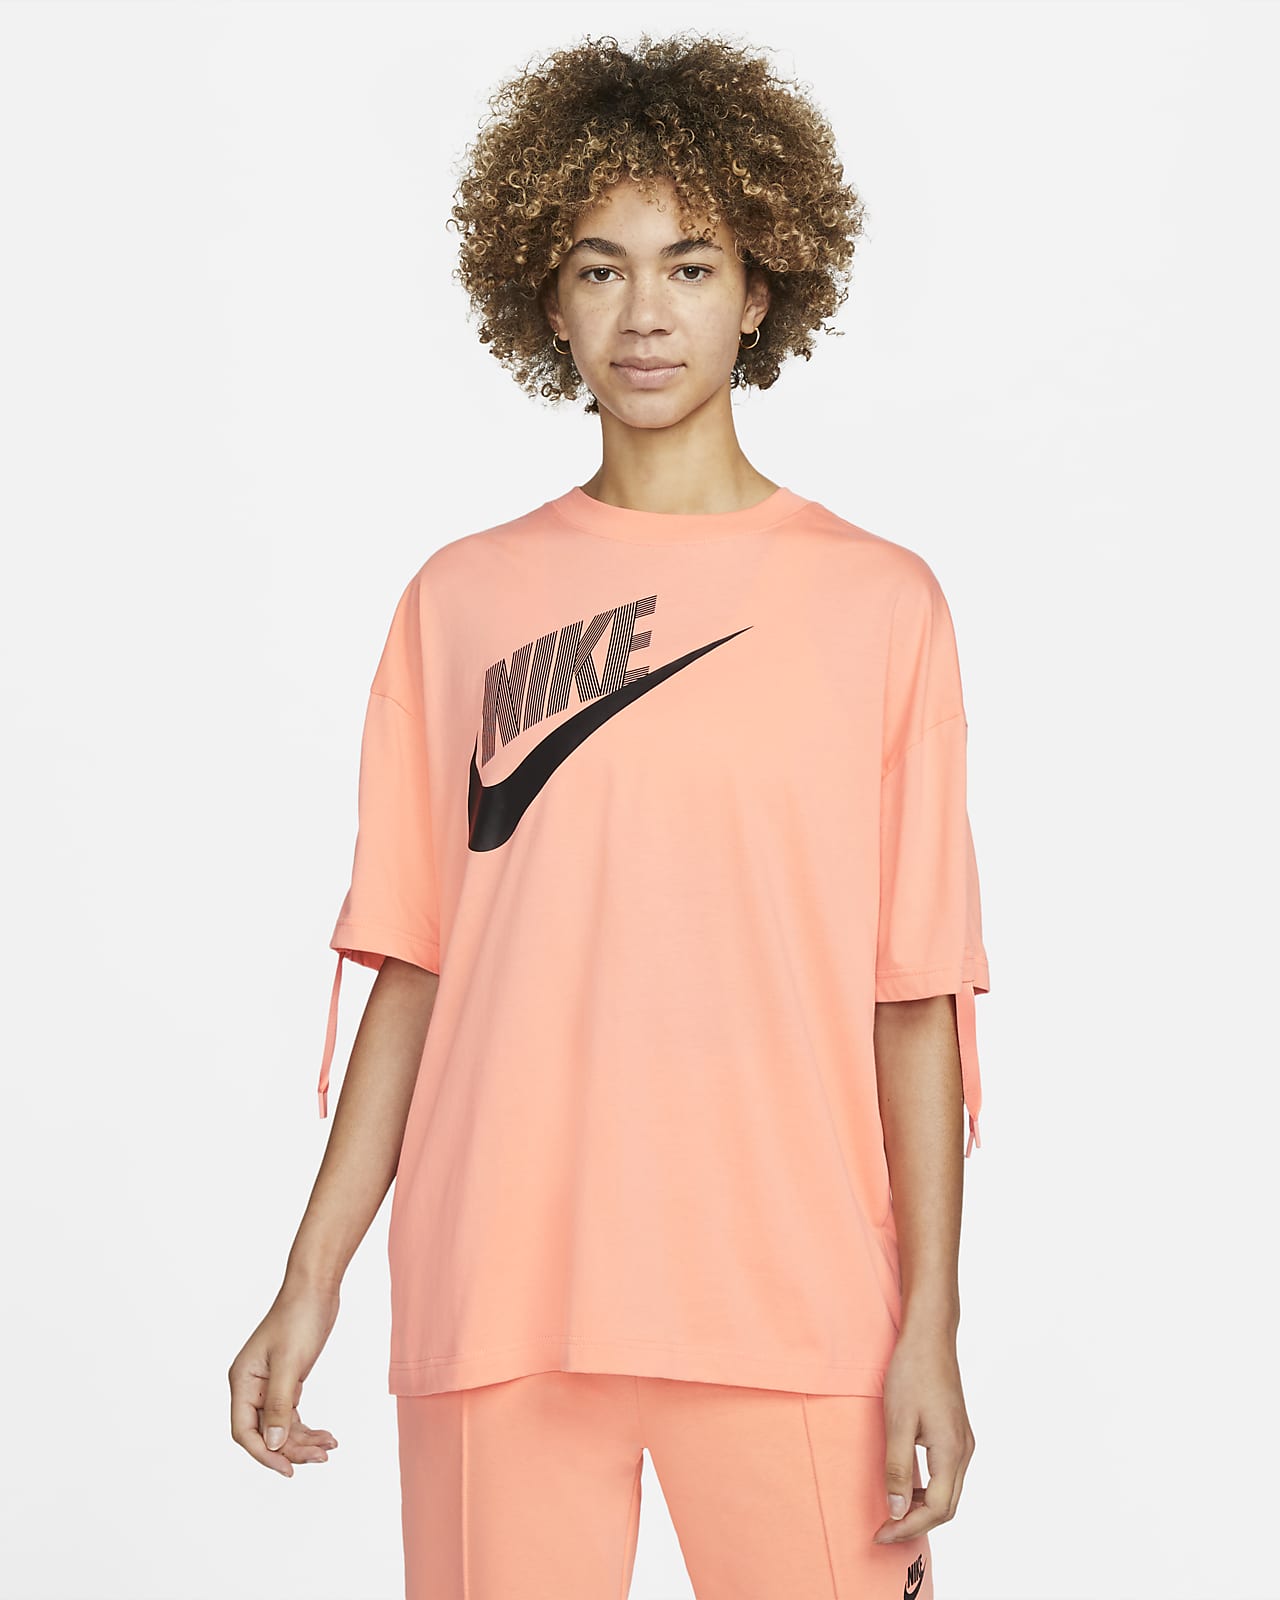 Nike Sportswear Tanz-T-Shirt für Damen